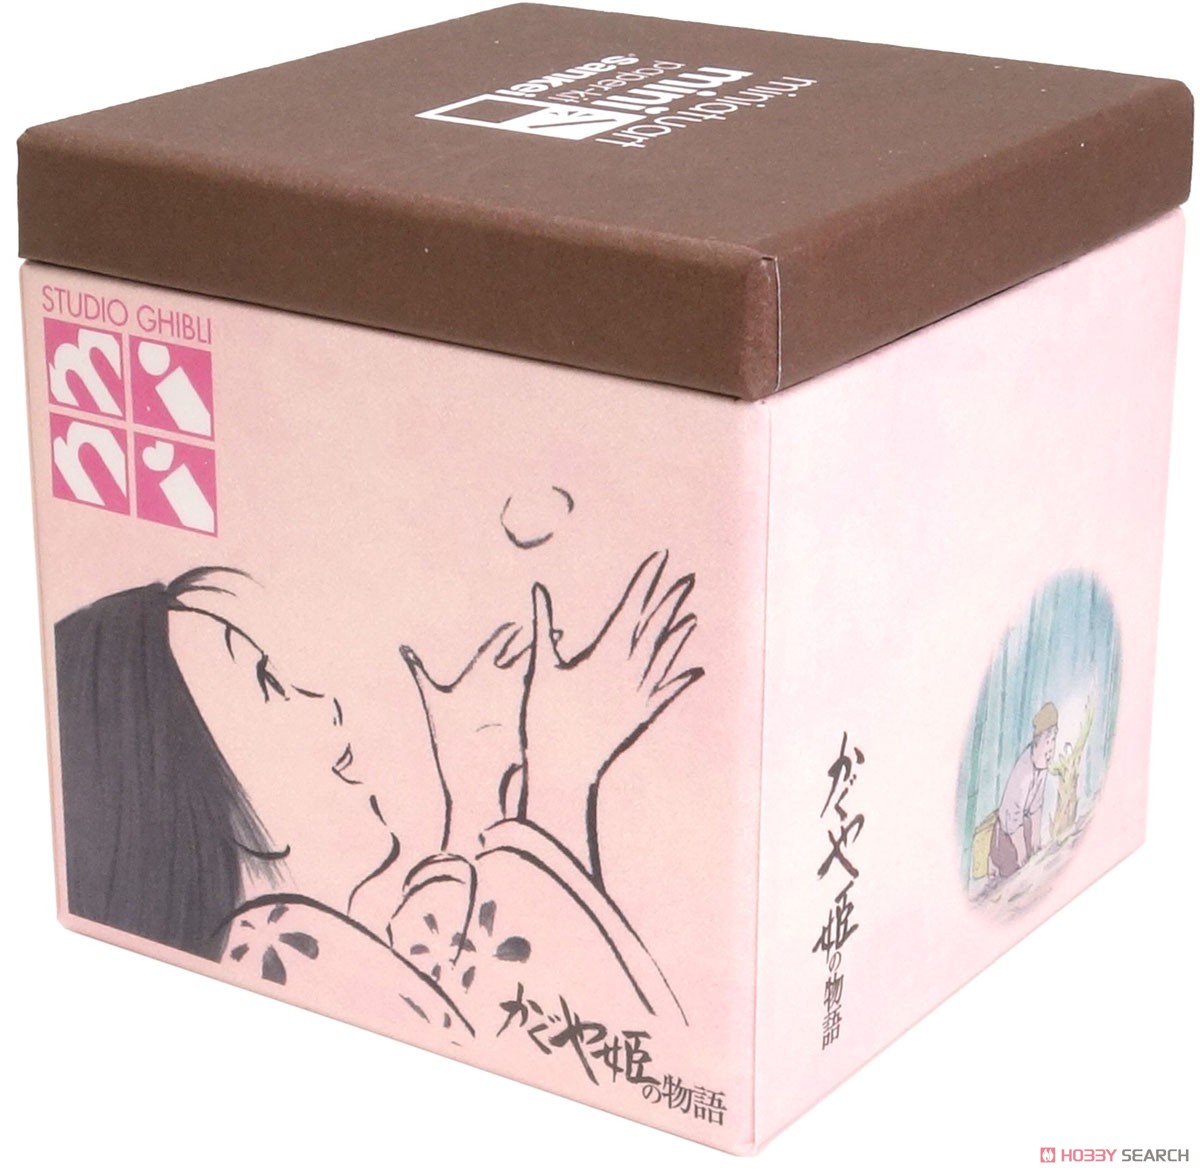 [Miniatuart] Studio Ghibli Mini : The Tale of the Princess Kaguya Under the Wild Cherry Tree (Assemble kit) (Railway Related Items) Package1